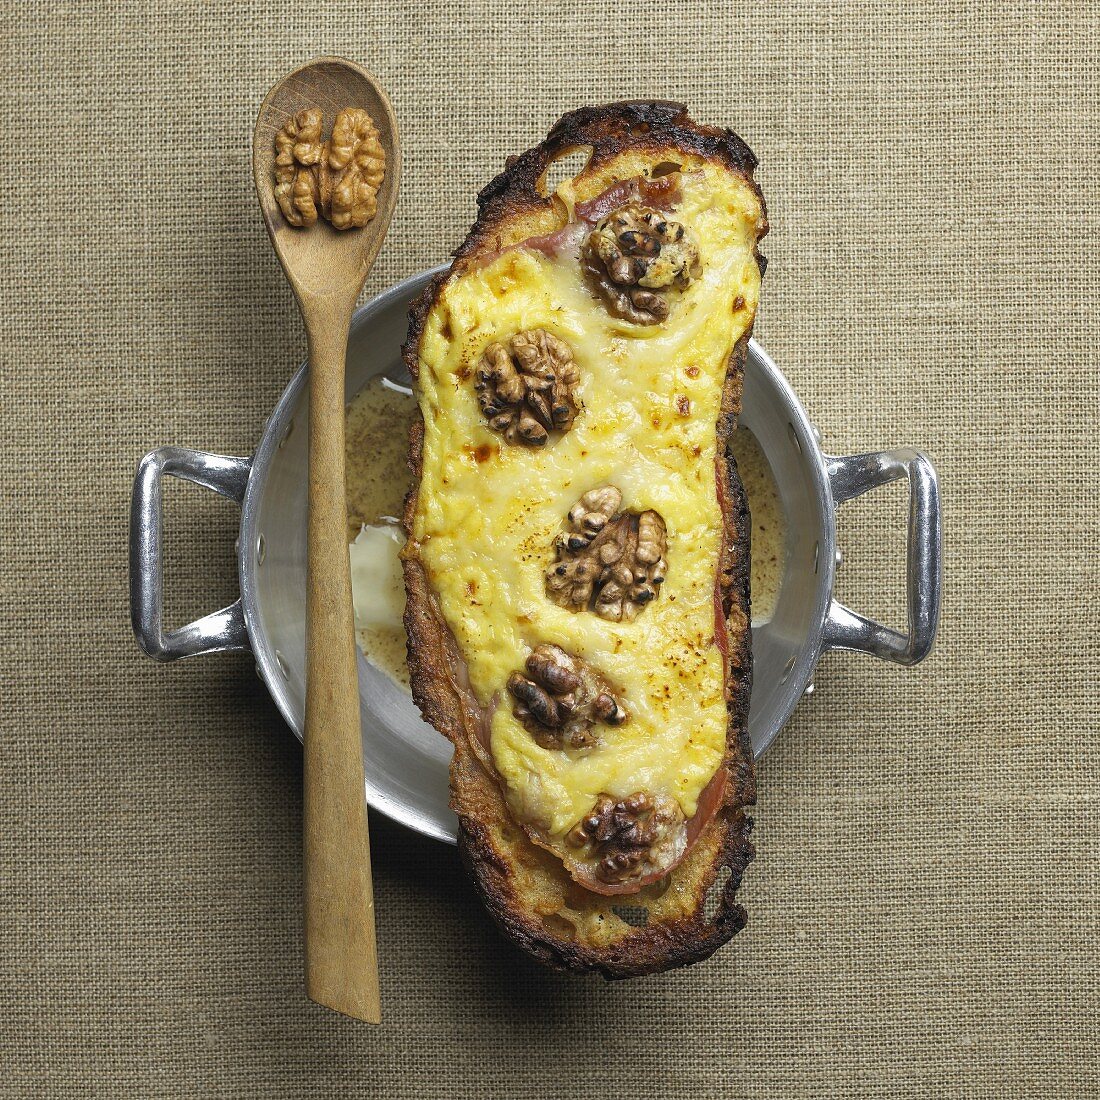 Savoie cheese on toast with walnuts